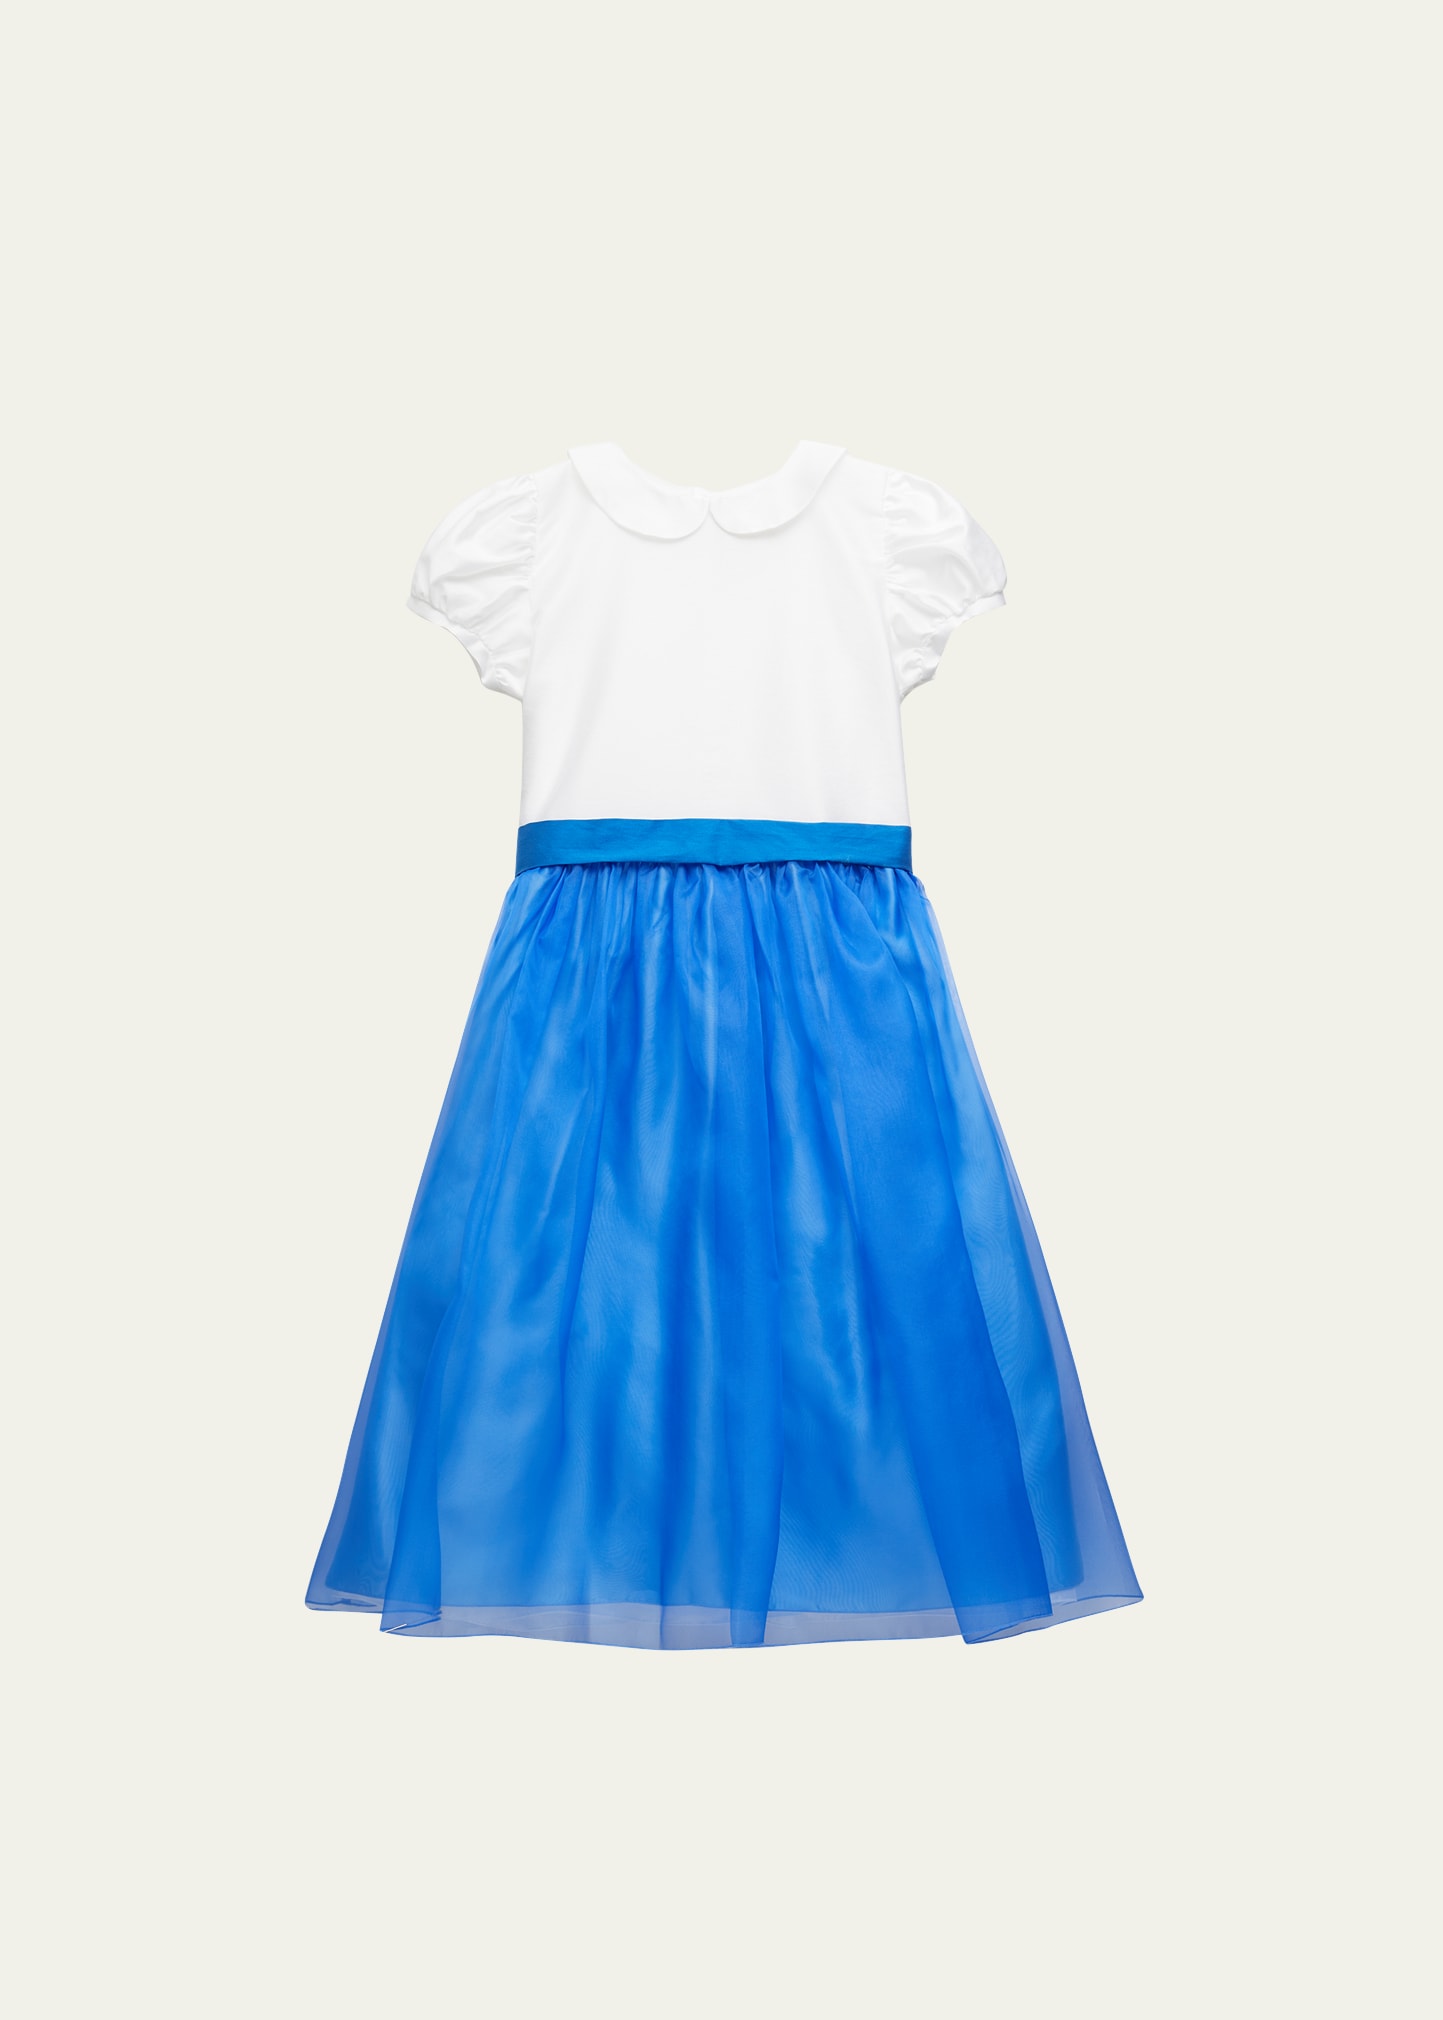 Mariella Ferrari Kids' Girl's Peter Pan Collared Combo Dress In Blue